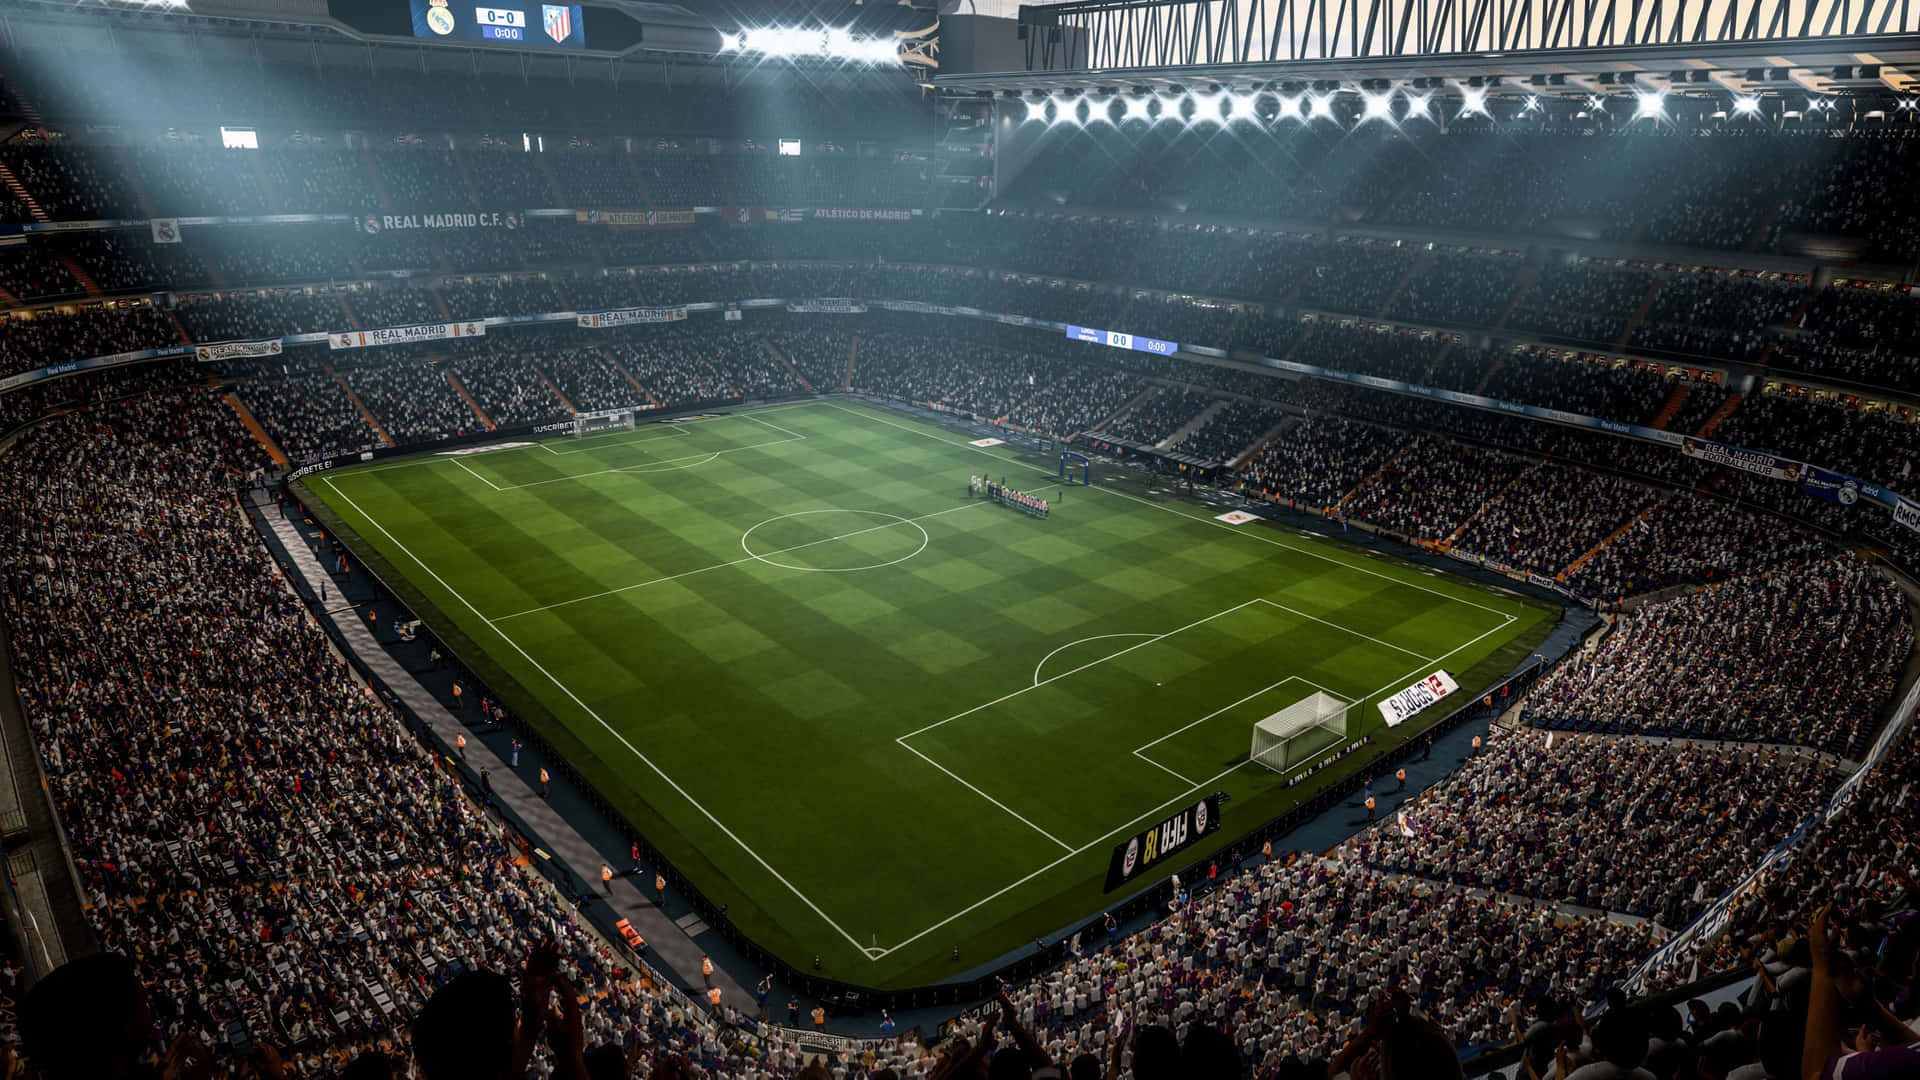 A packed soccer stadium under bright lights